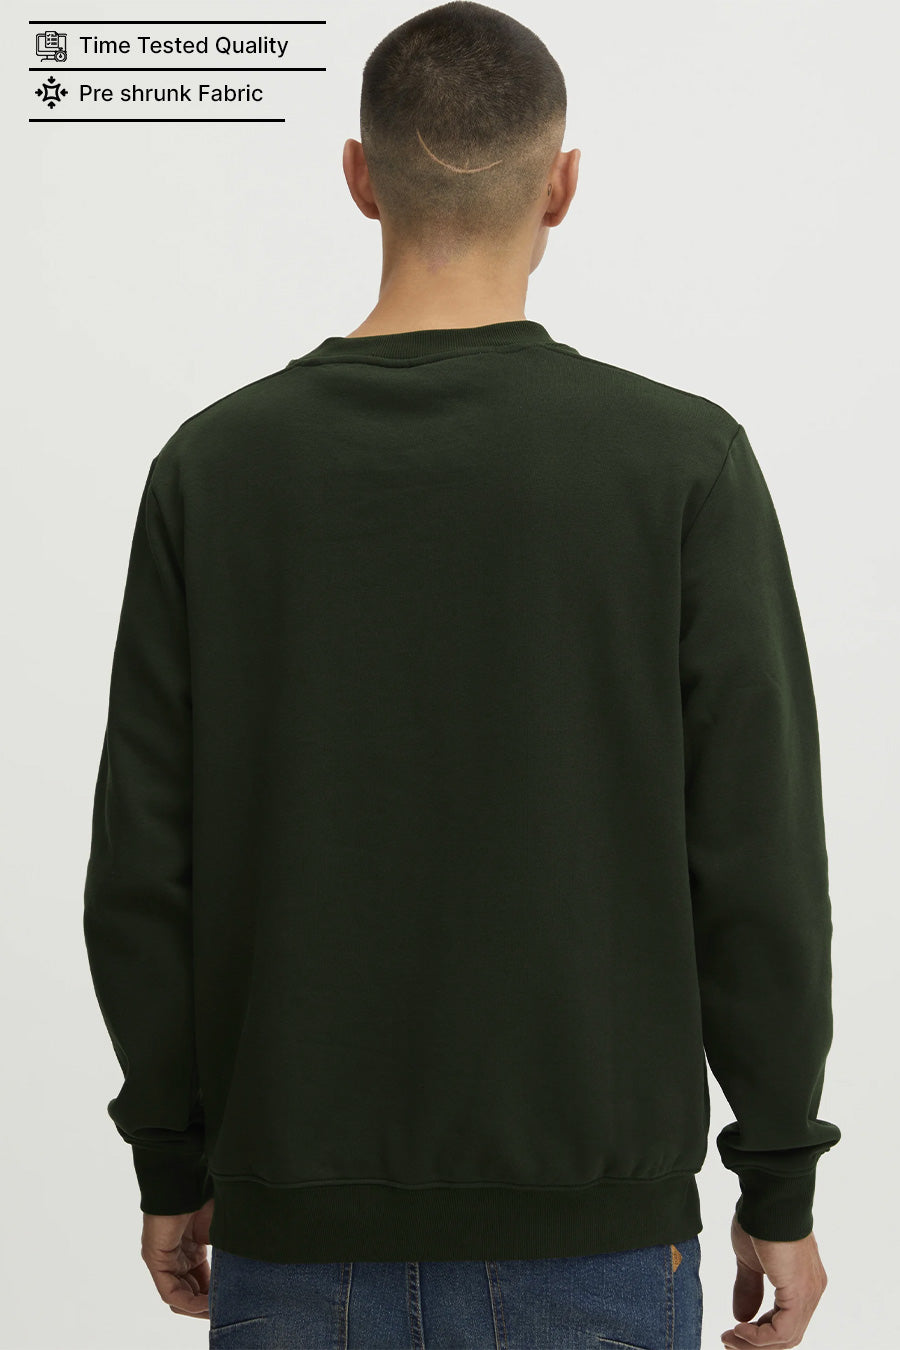 Army Green - Fleece Sweatshirt